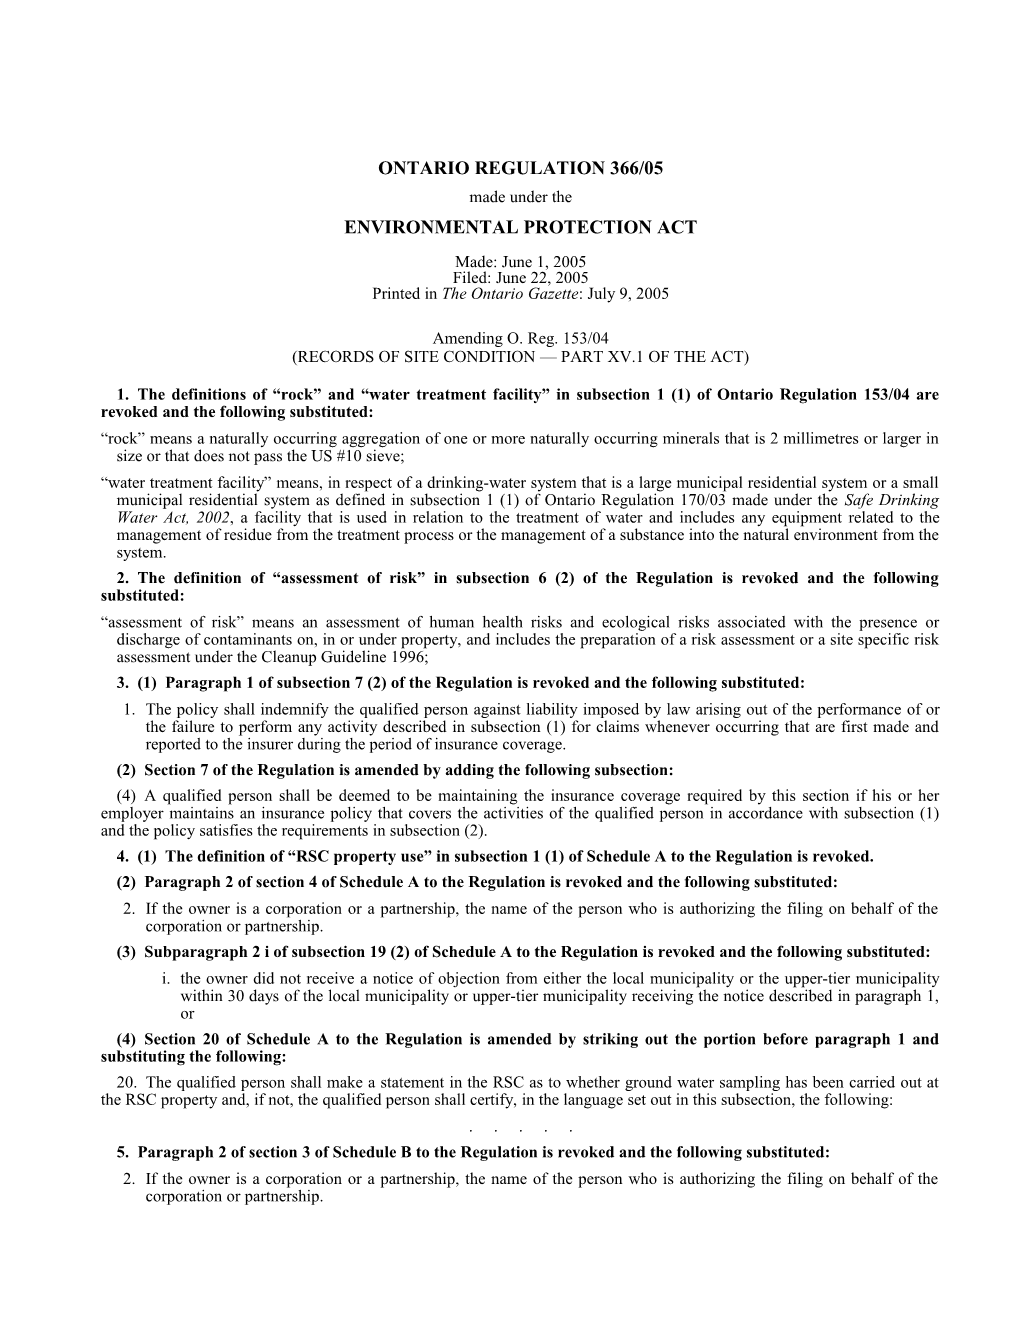 ENVIRONMENTAL PROTECTION ACT - O. Reg. 366/05